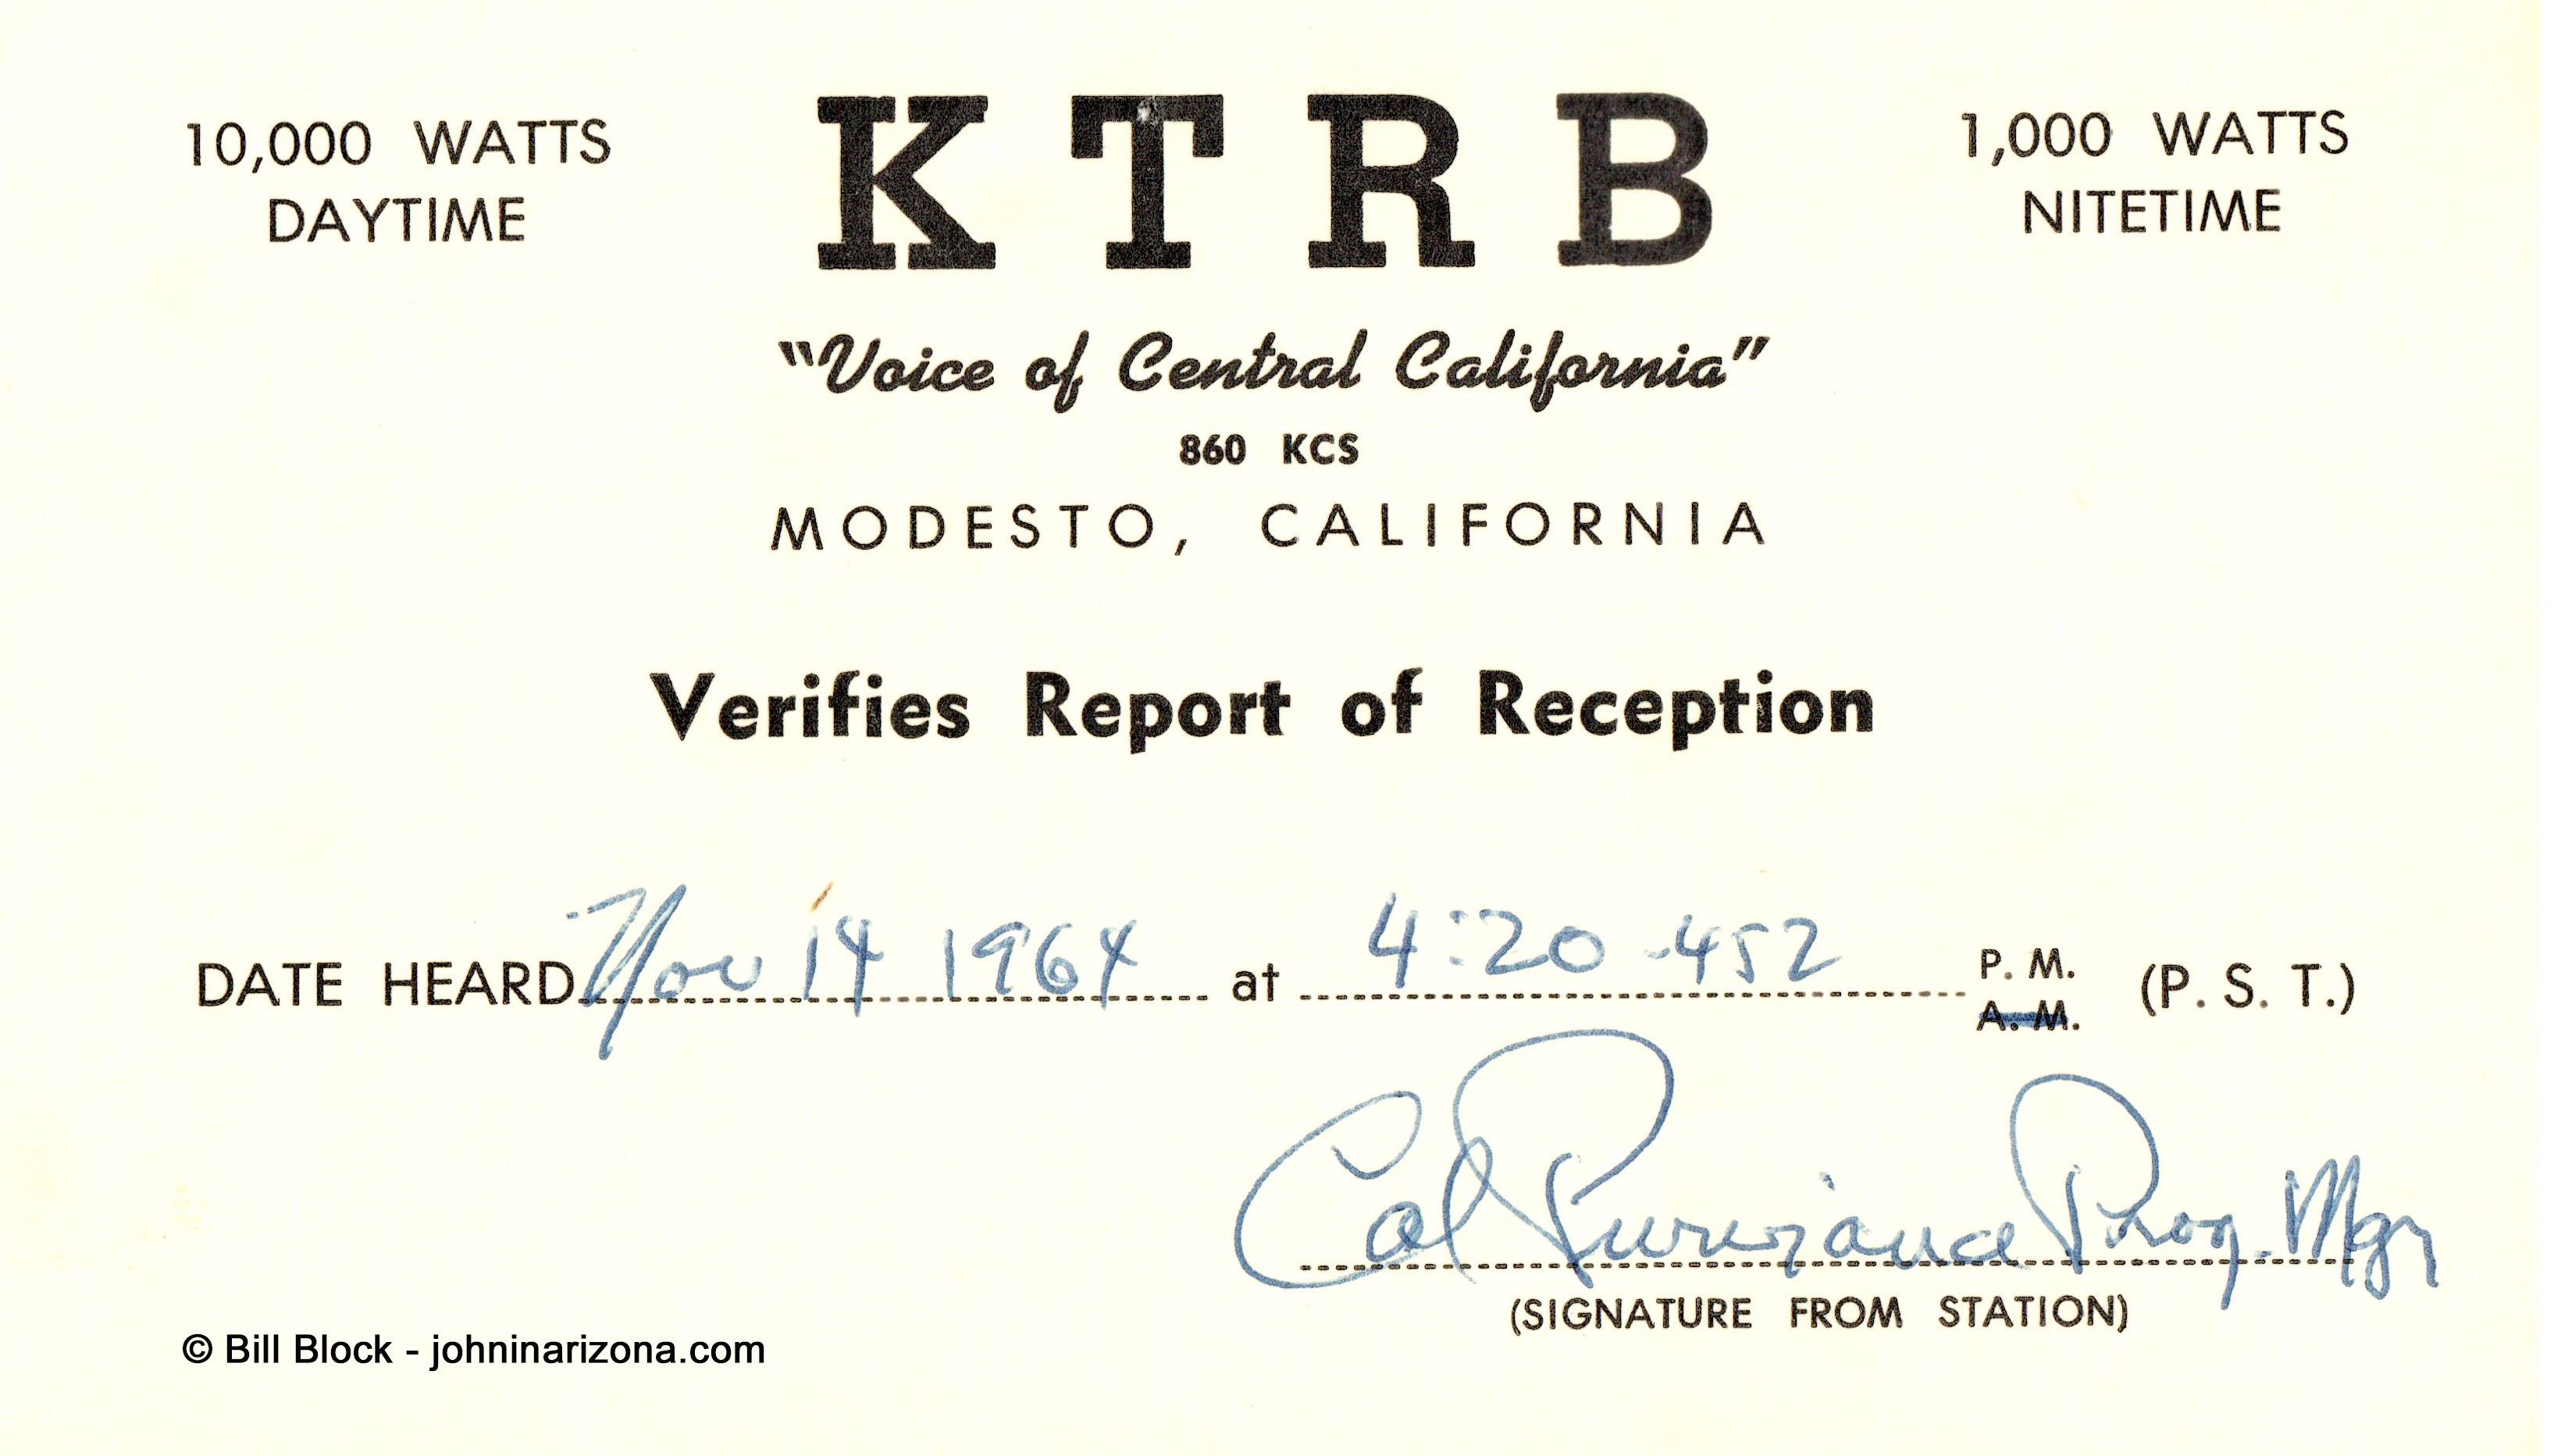 KTRB Radio 860 Modesto, California